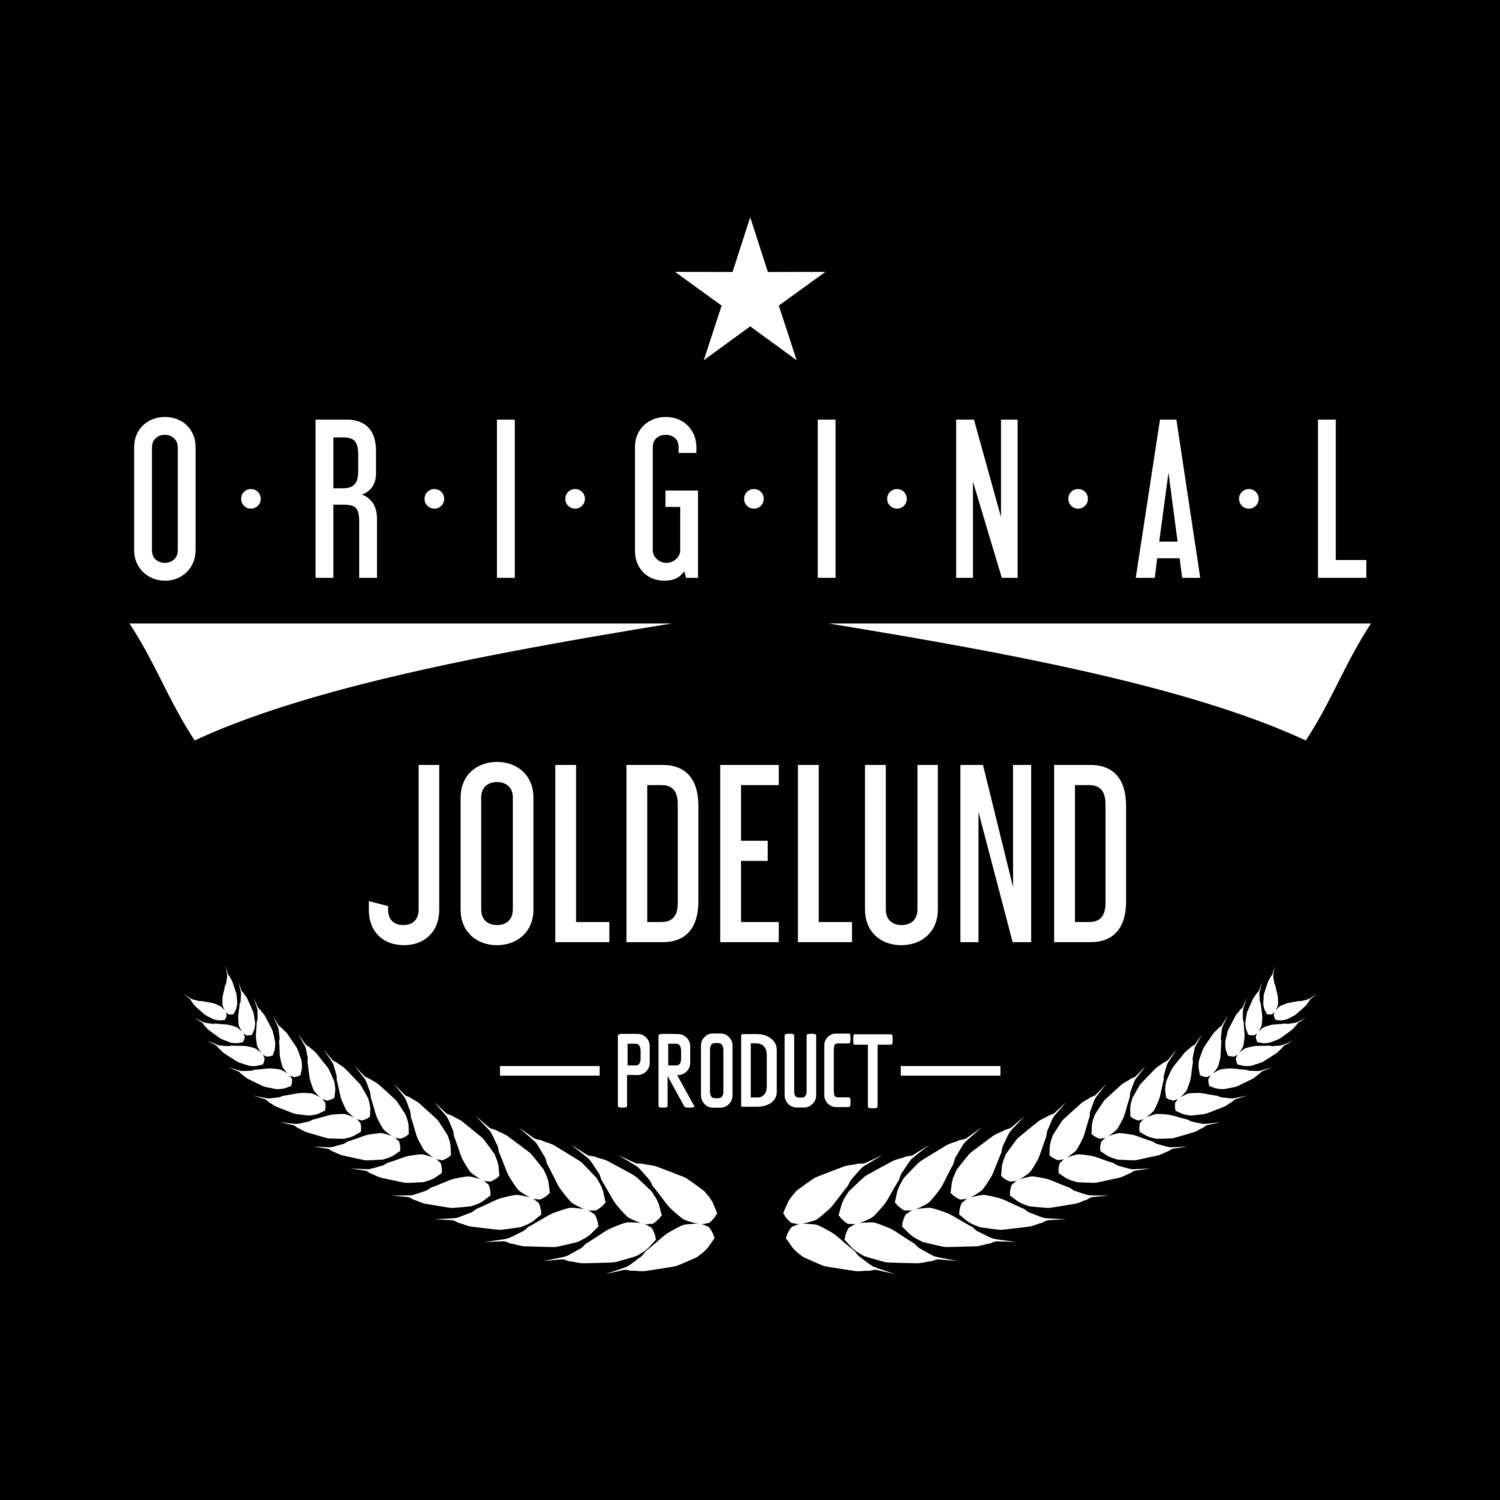 Joldelund T-Shirt »Original Product«